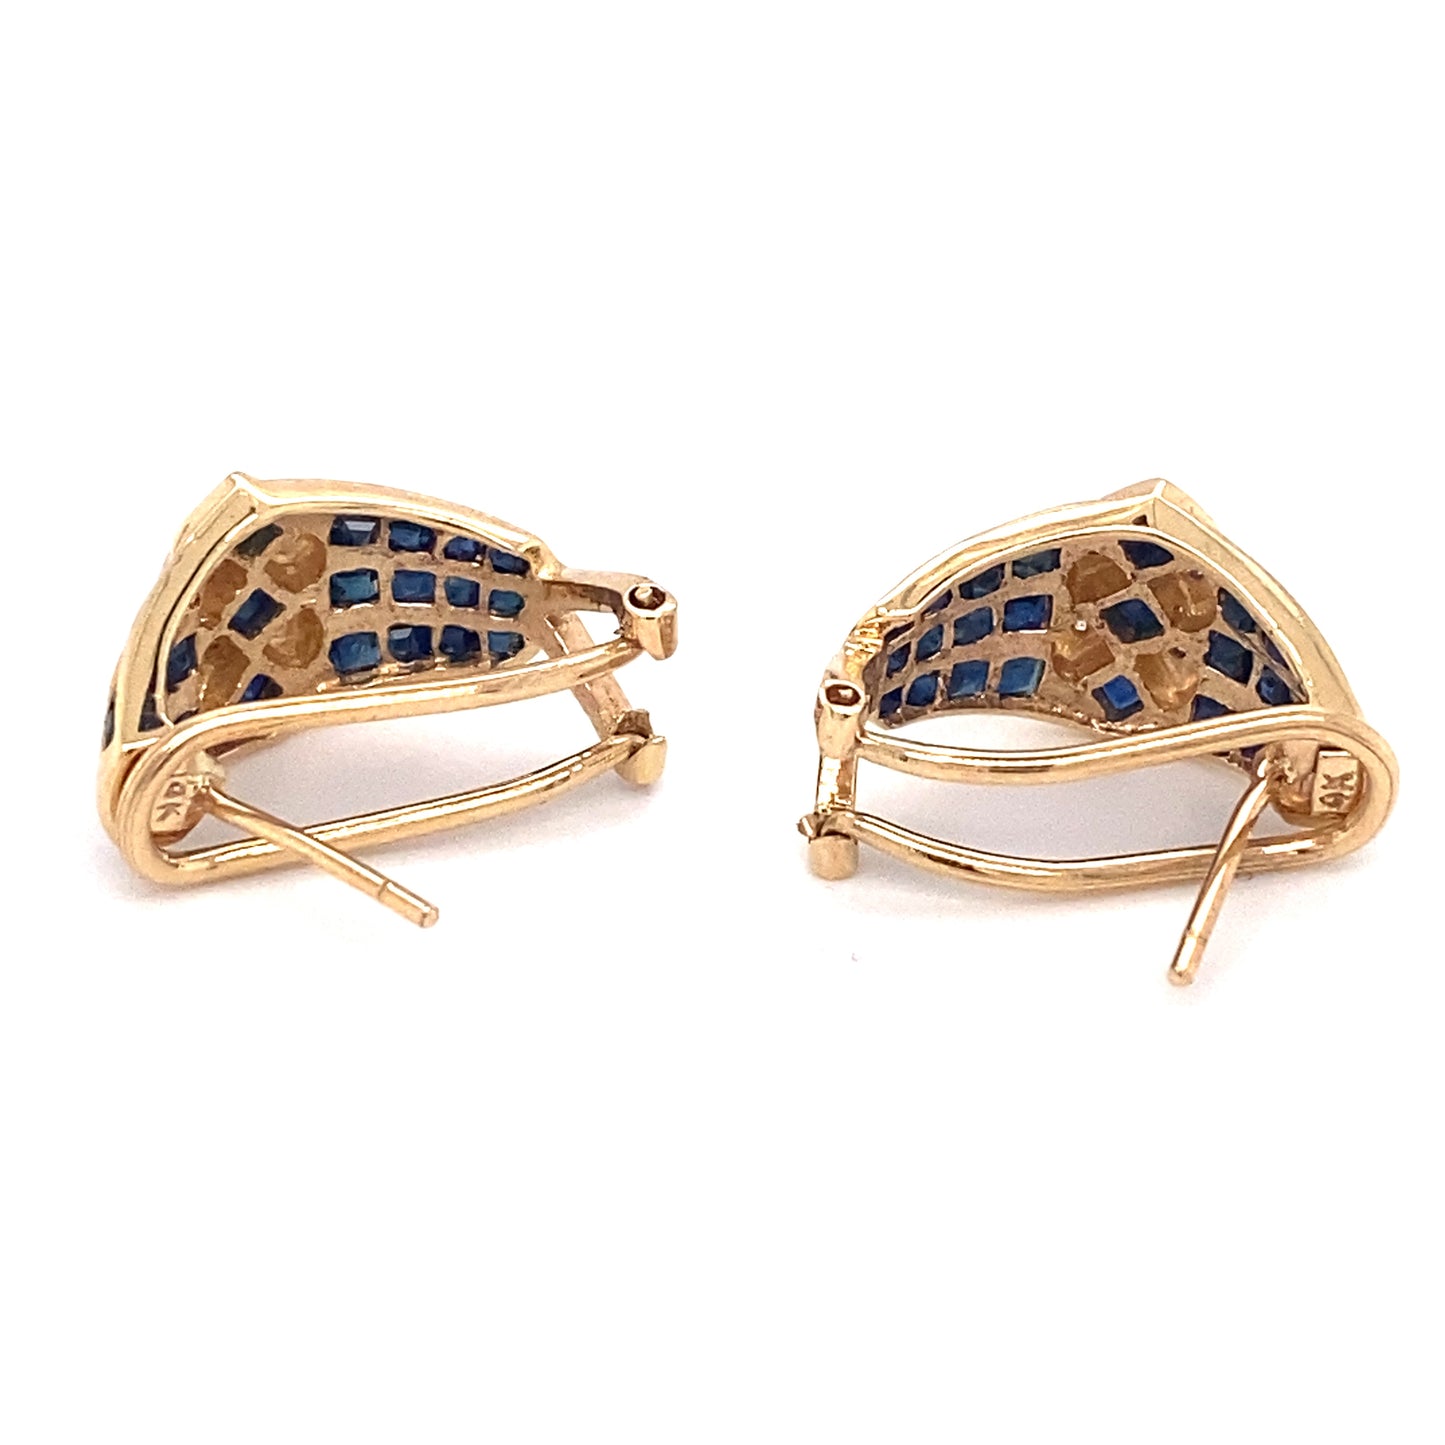 Circa 1950s Diamond and Sapphire Half Hoop Earrings in 14K Gold